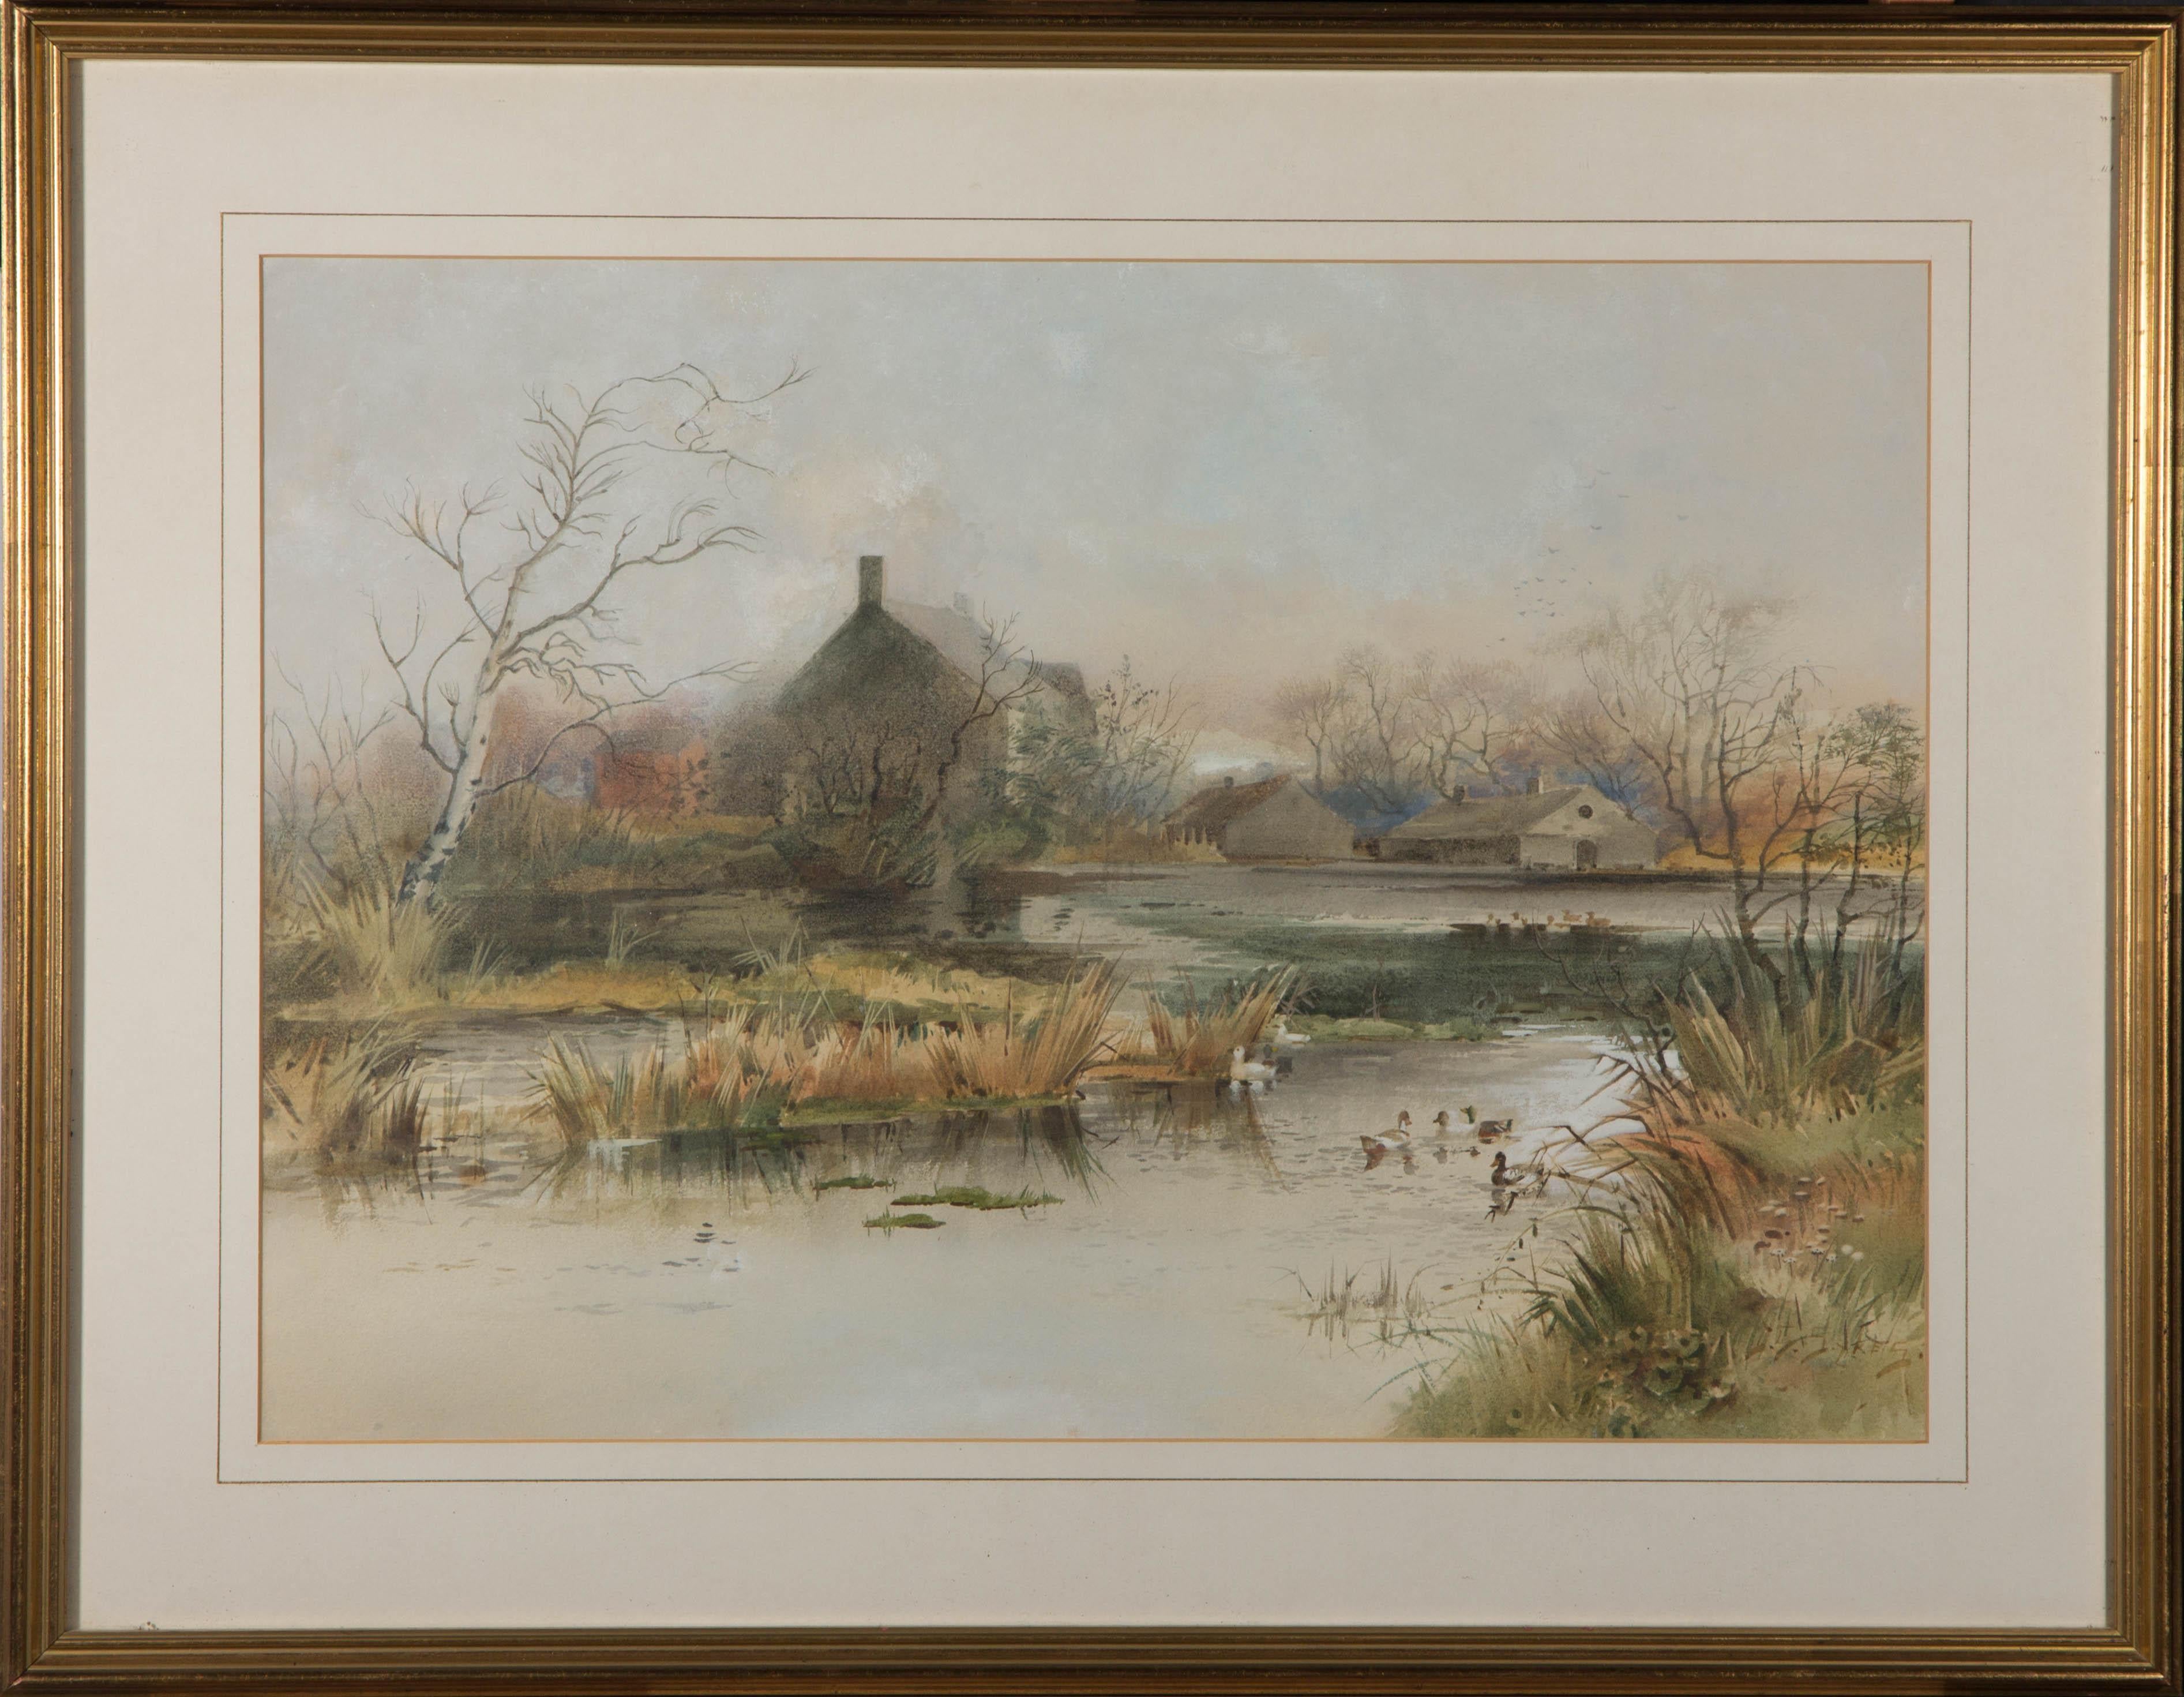 Unknown Landscape Art - S. Sykes - Early 20th Century Watercolour, River Scene, Sheffield